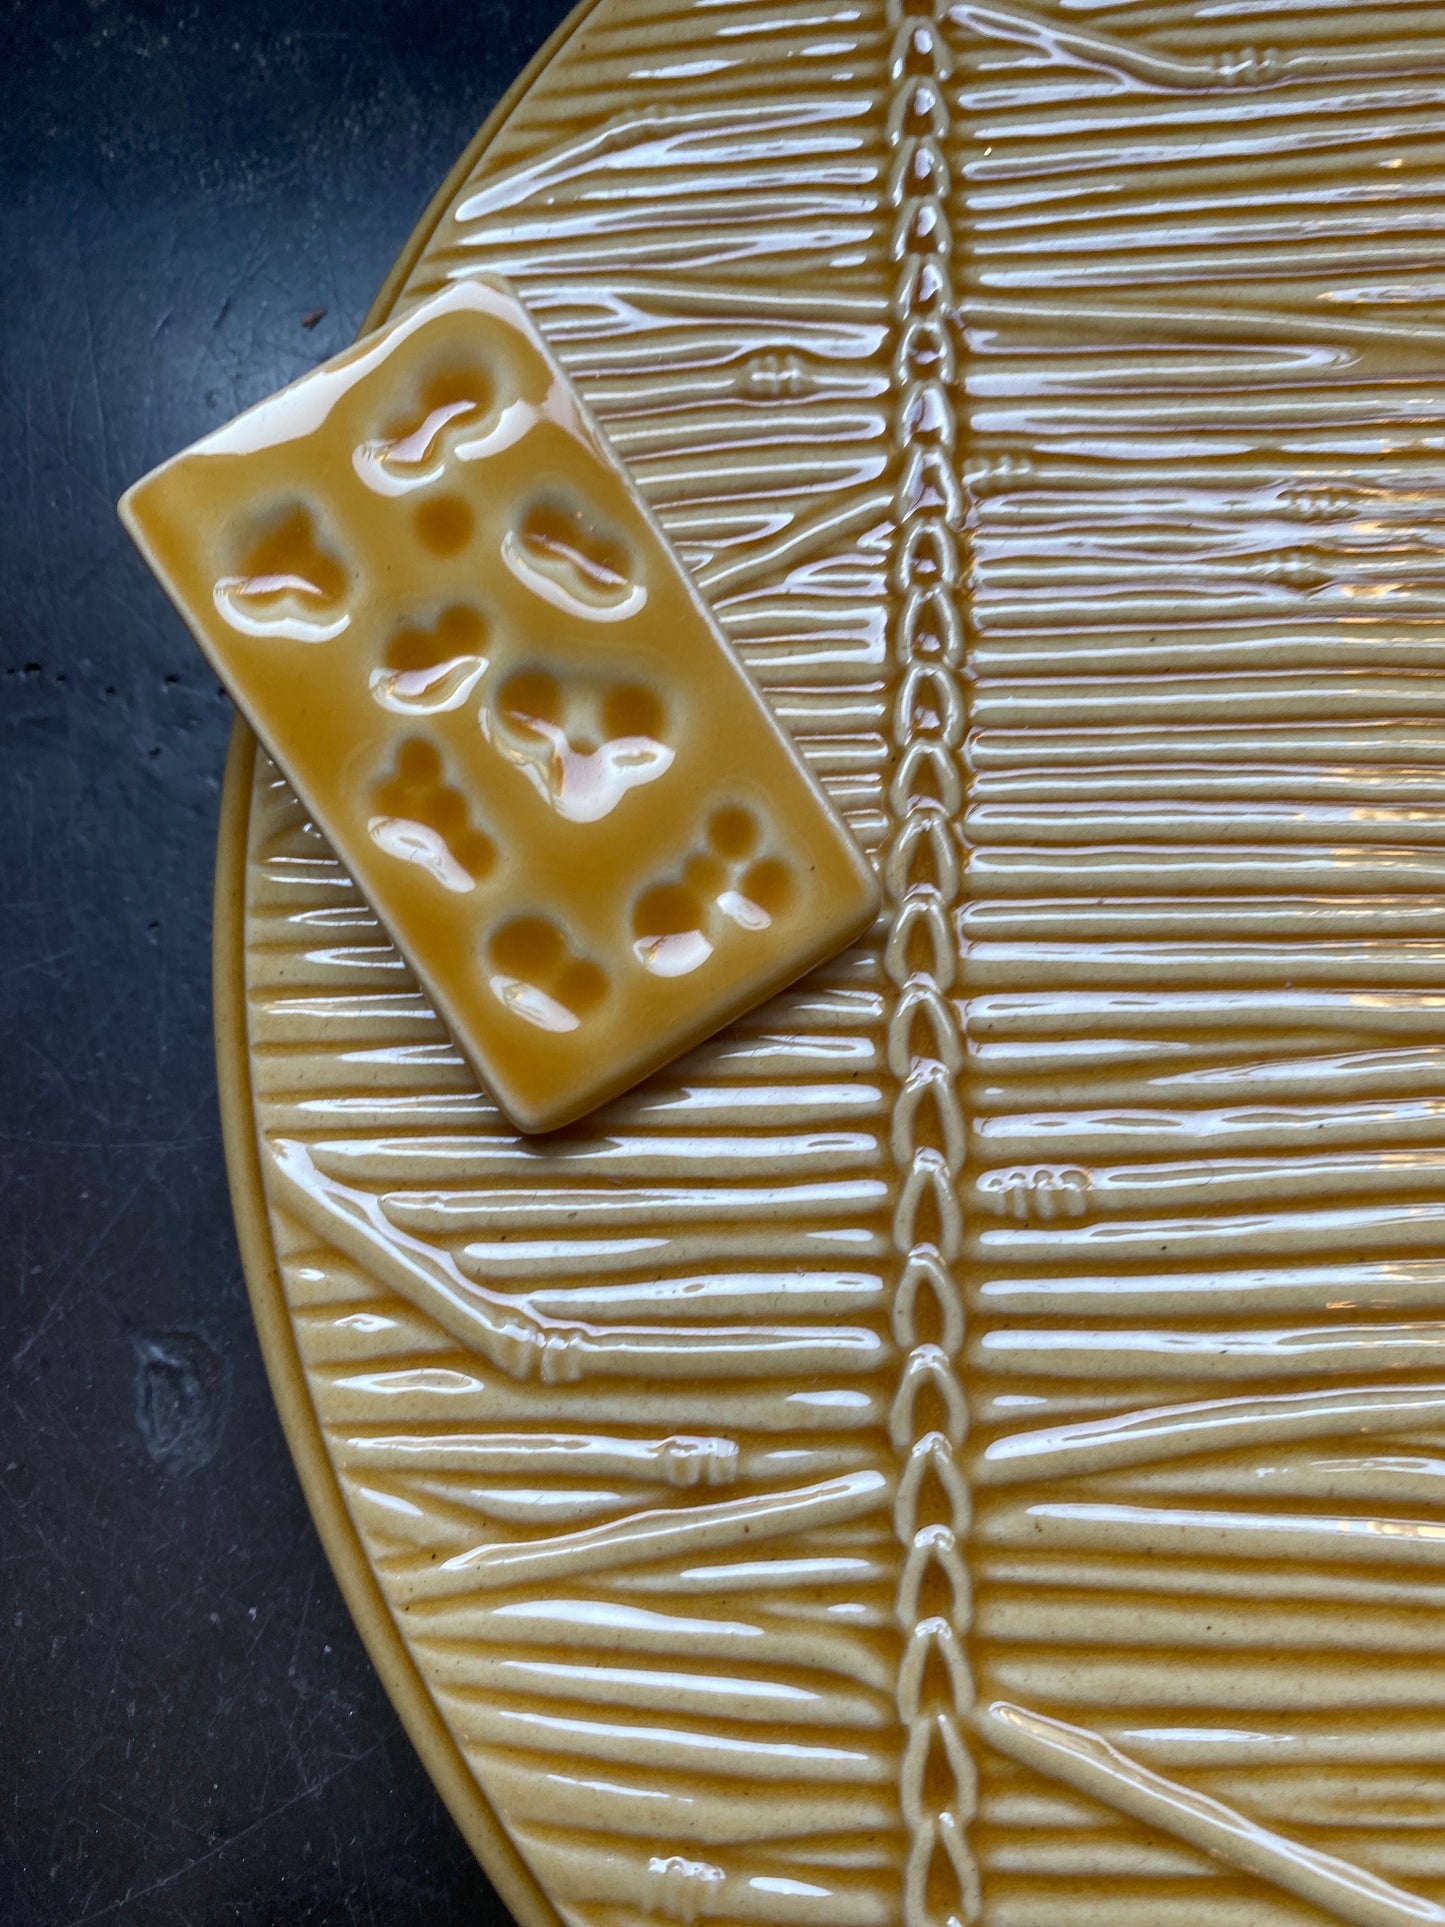 Bordallo Pinhero ceramic cheese plate